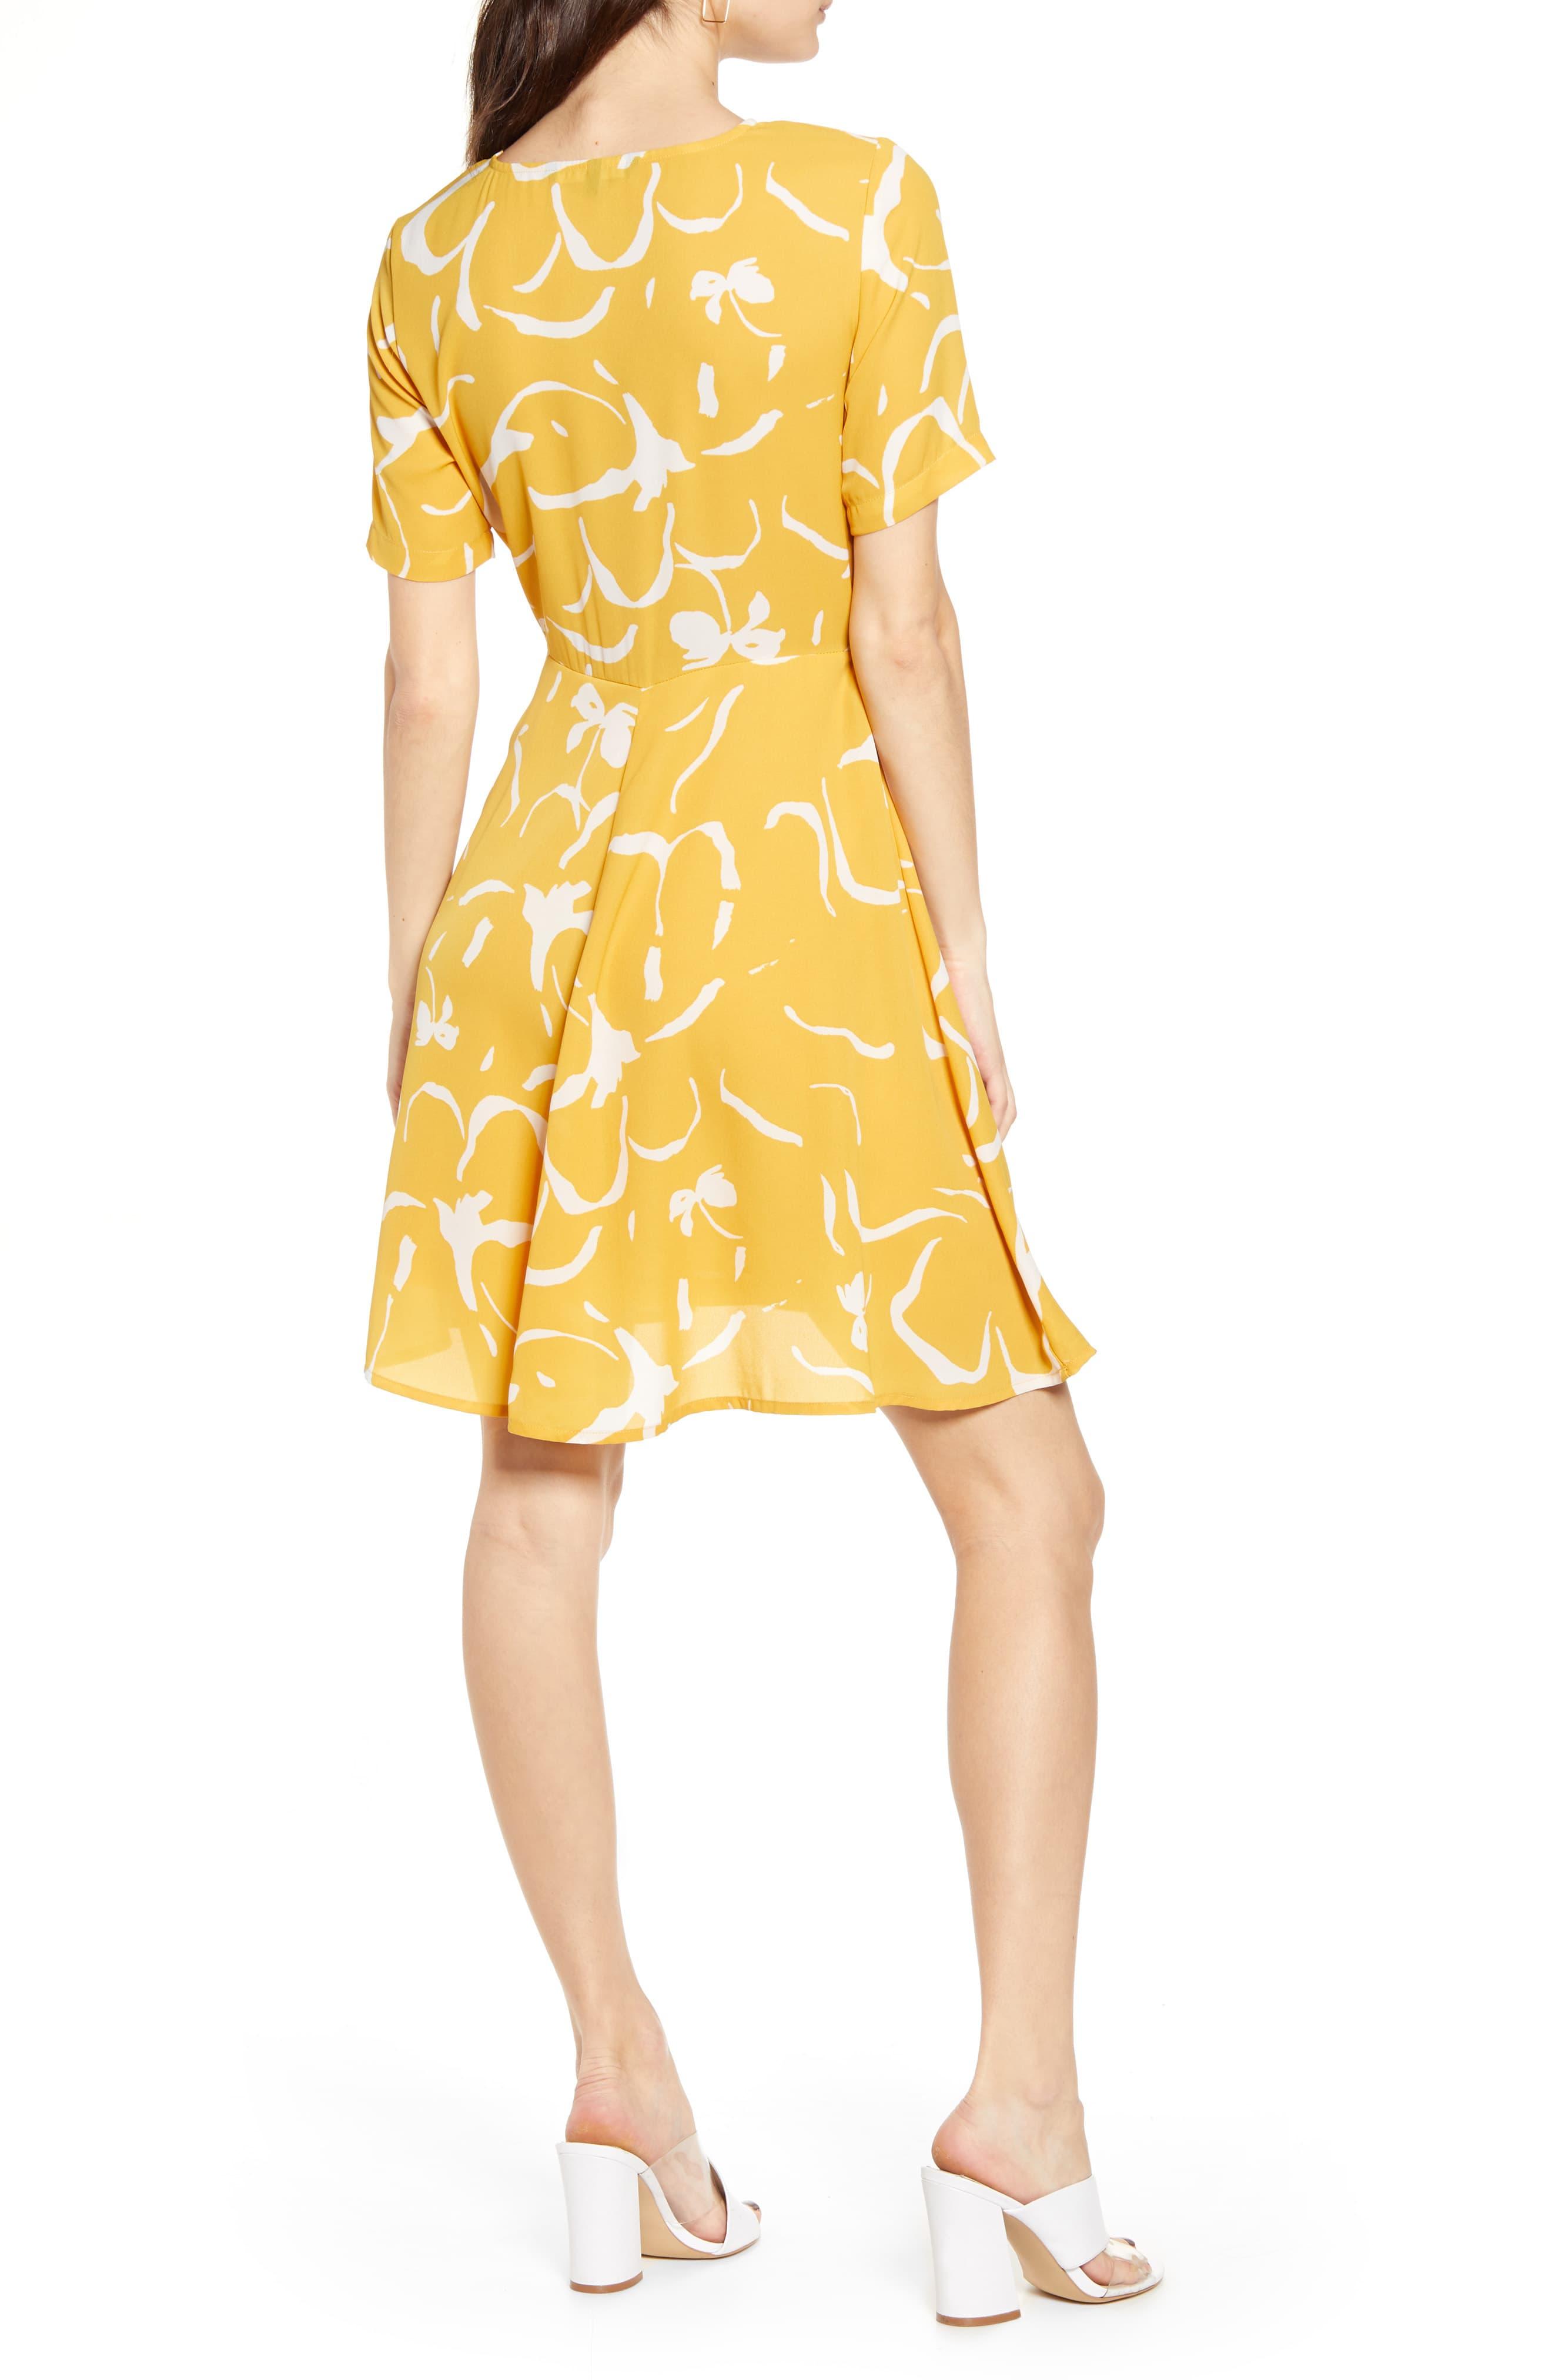 Vero Moda Ilona Tie Front Short Sleeve Dress in Yellow - Lyst